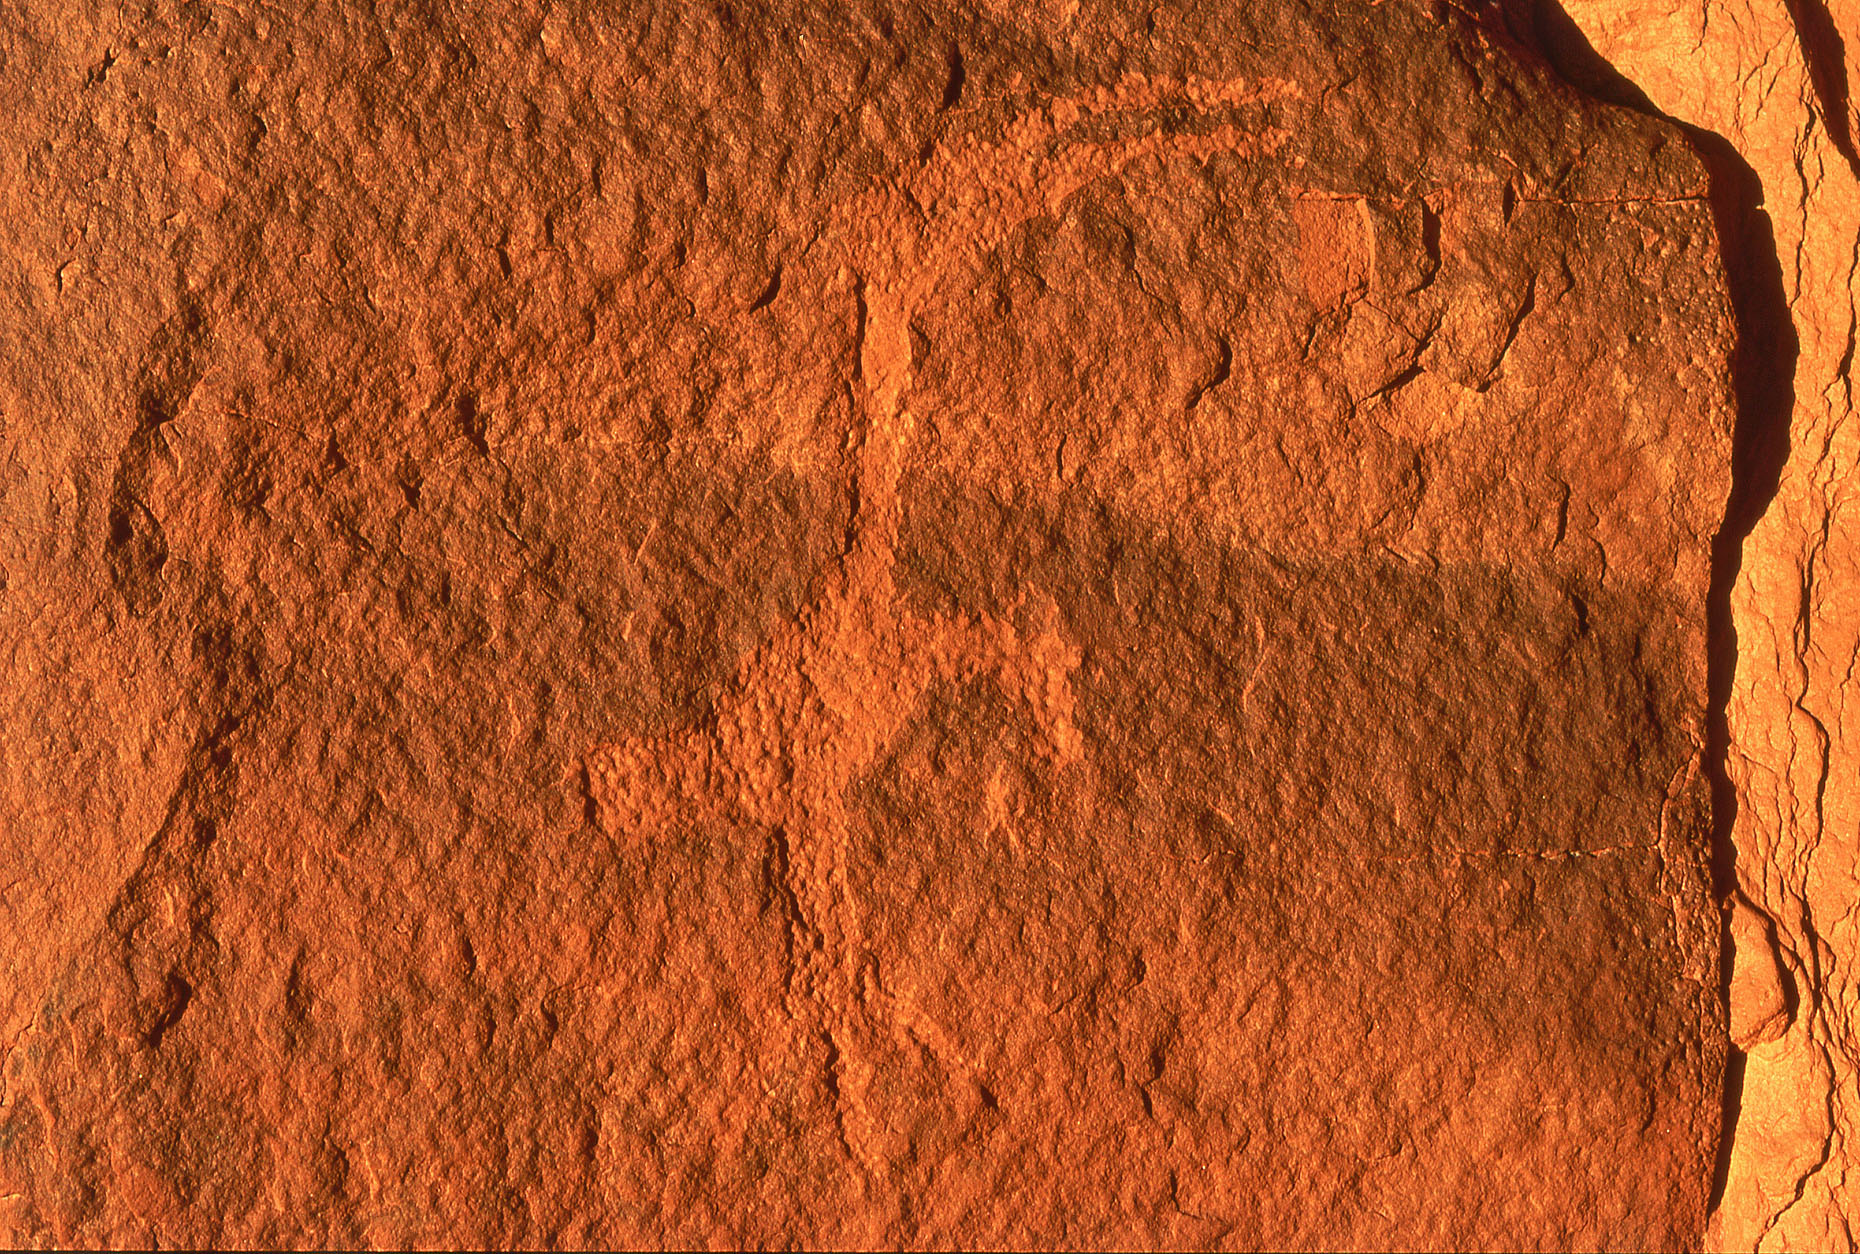 Shaman bird petroglyph, John Annerino, Monument Valley Navajo Tribal Park, Utah-Arizona